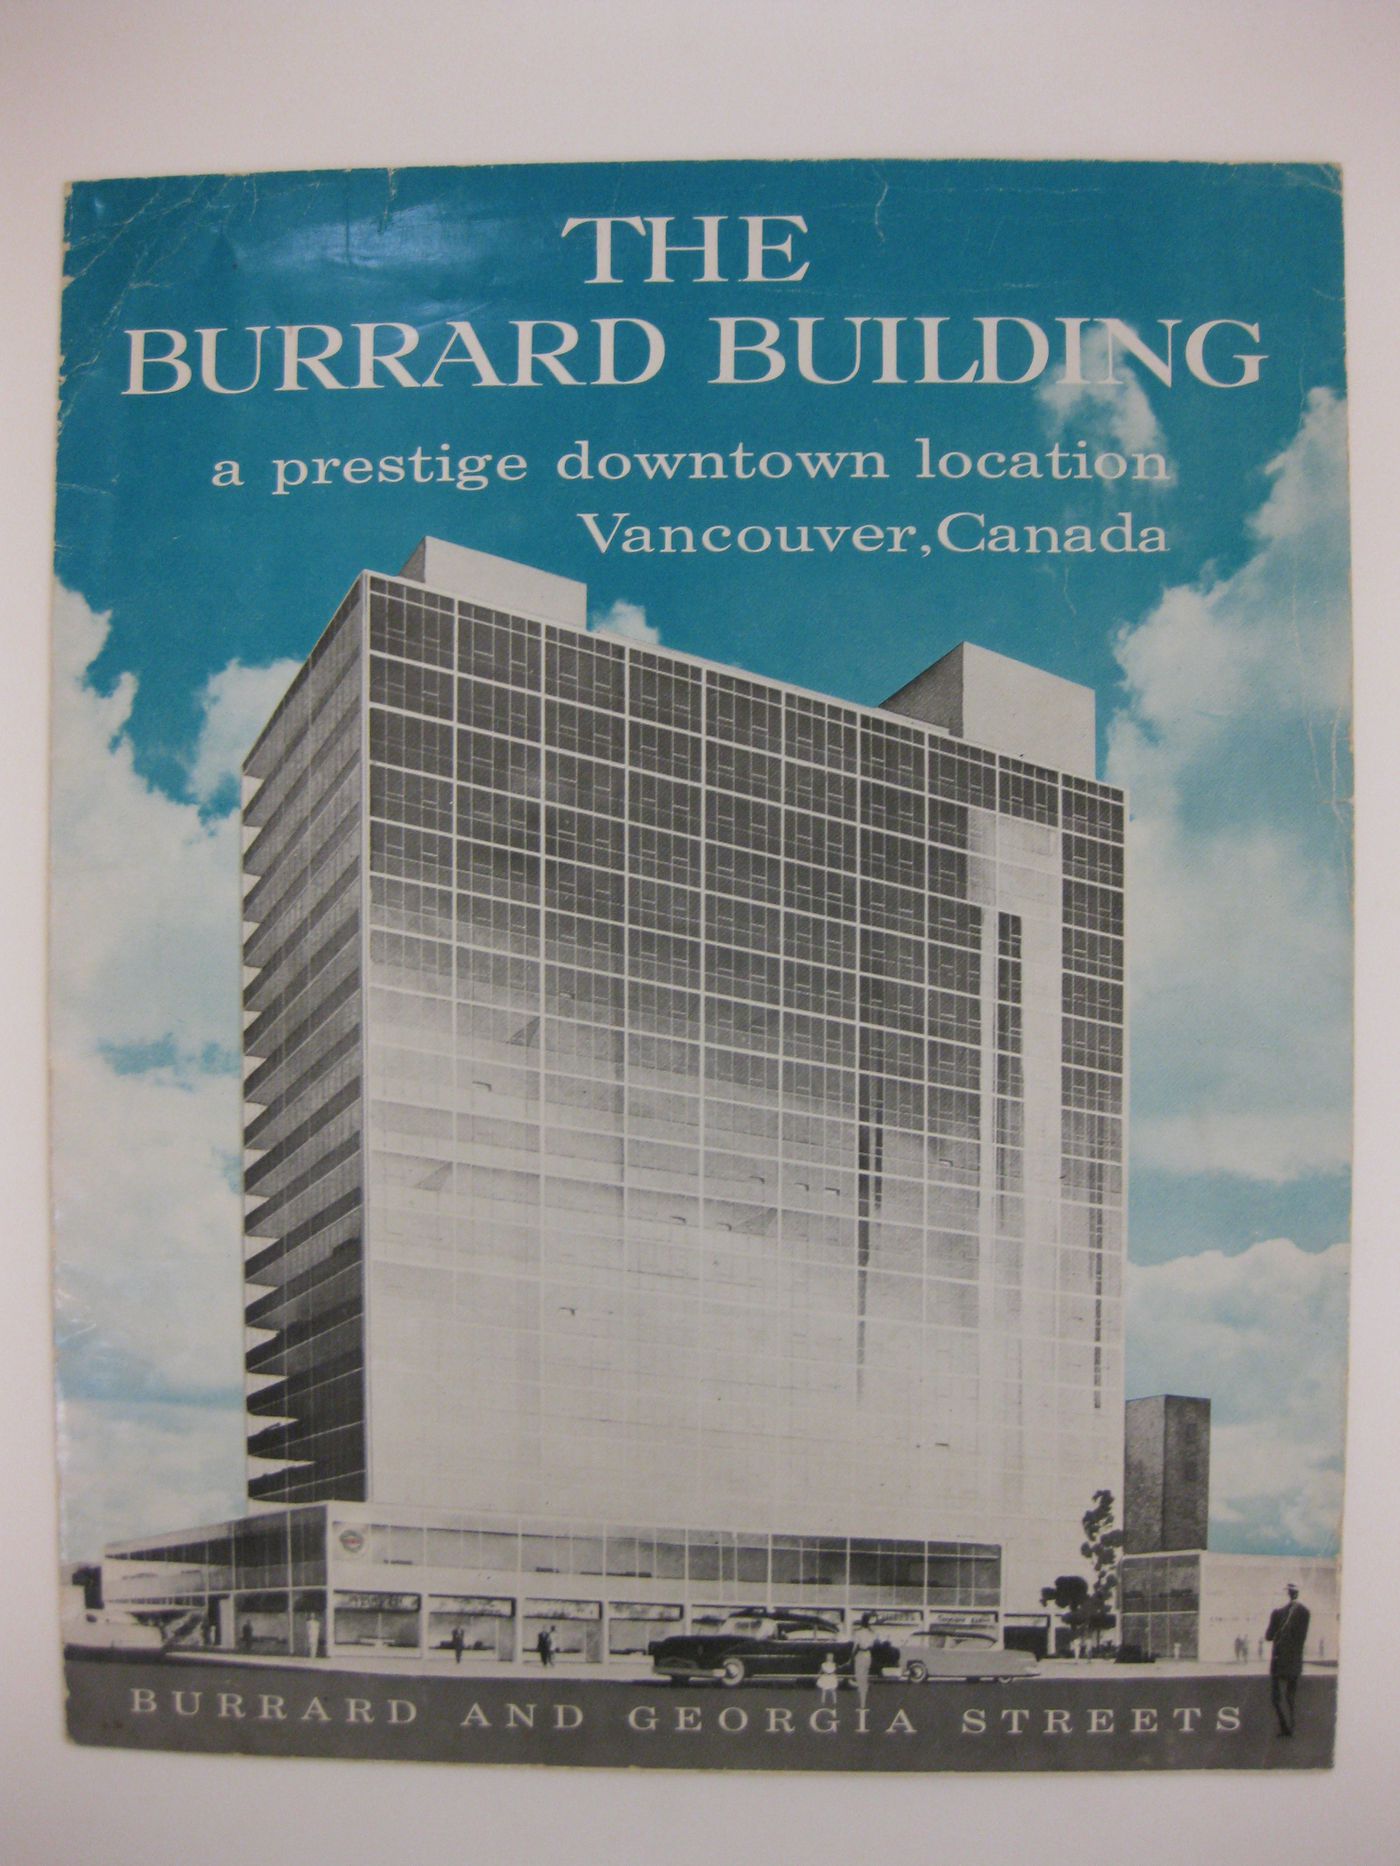 Burrard Building, Vancouver